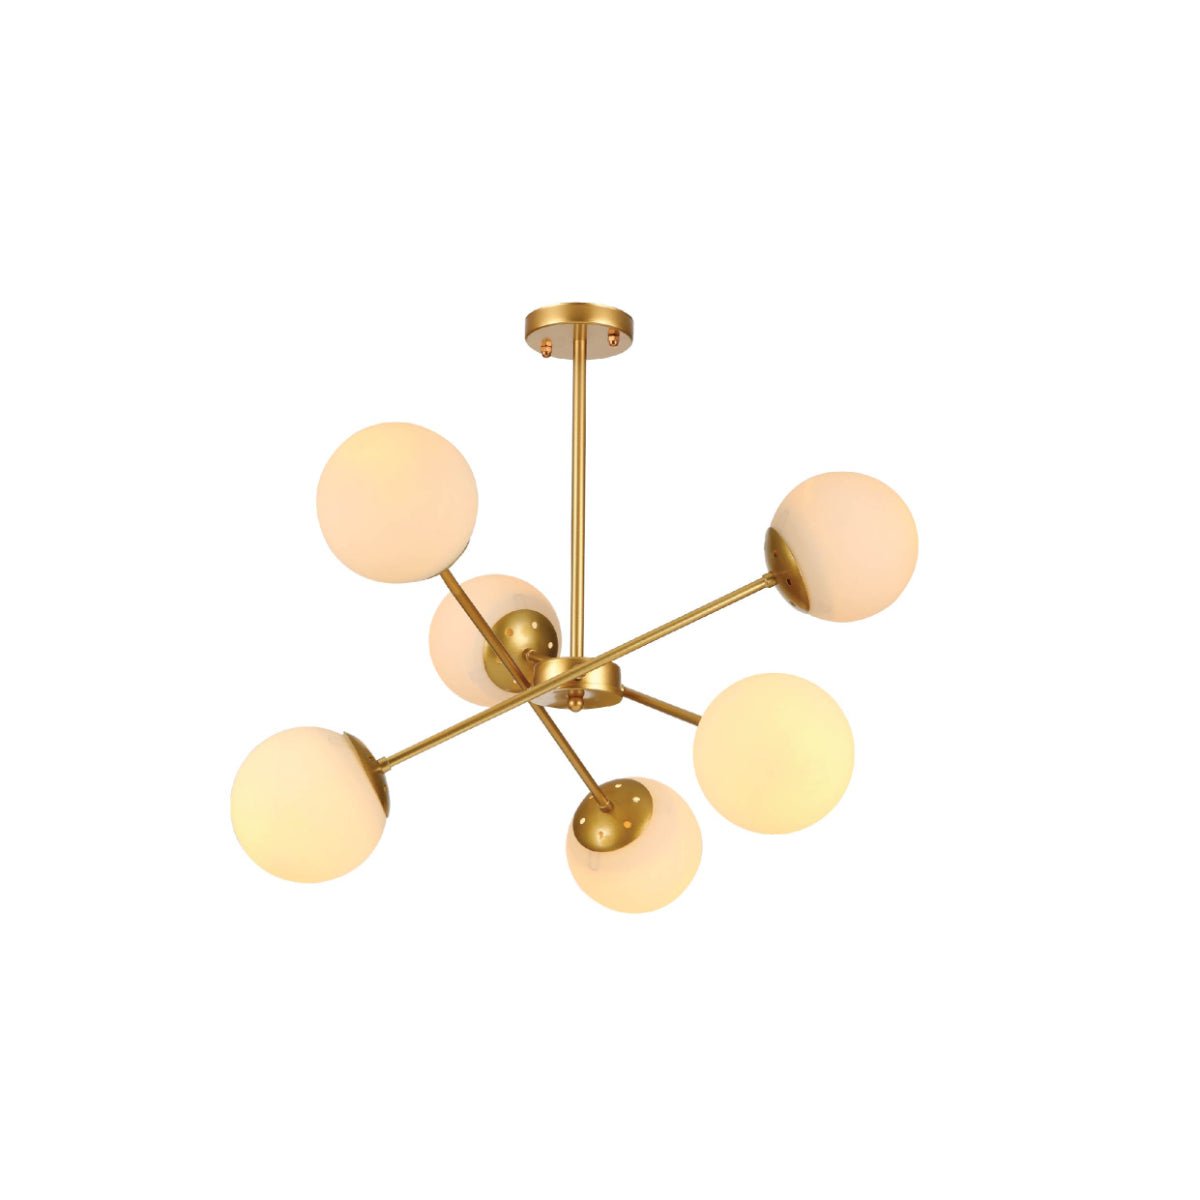 Main image of Gold Sputnik Metal Opal Globe Glass Modern Ceiling Light with E27 Fittings | TEKLED 159-17656